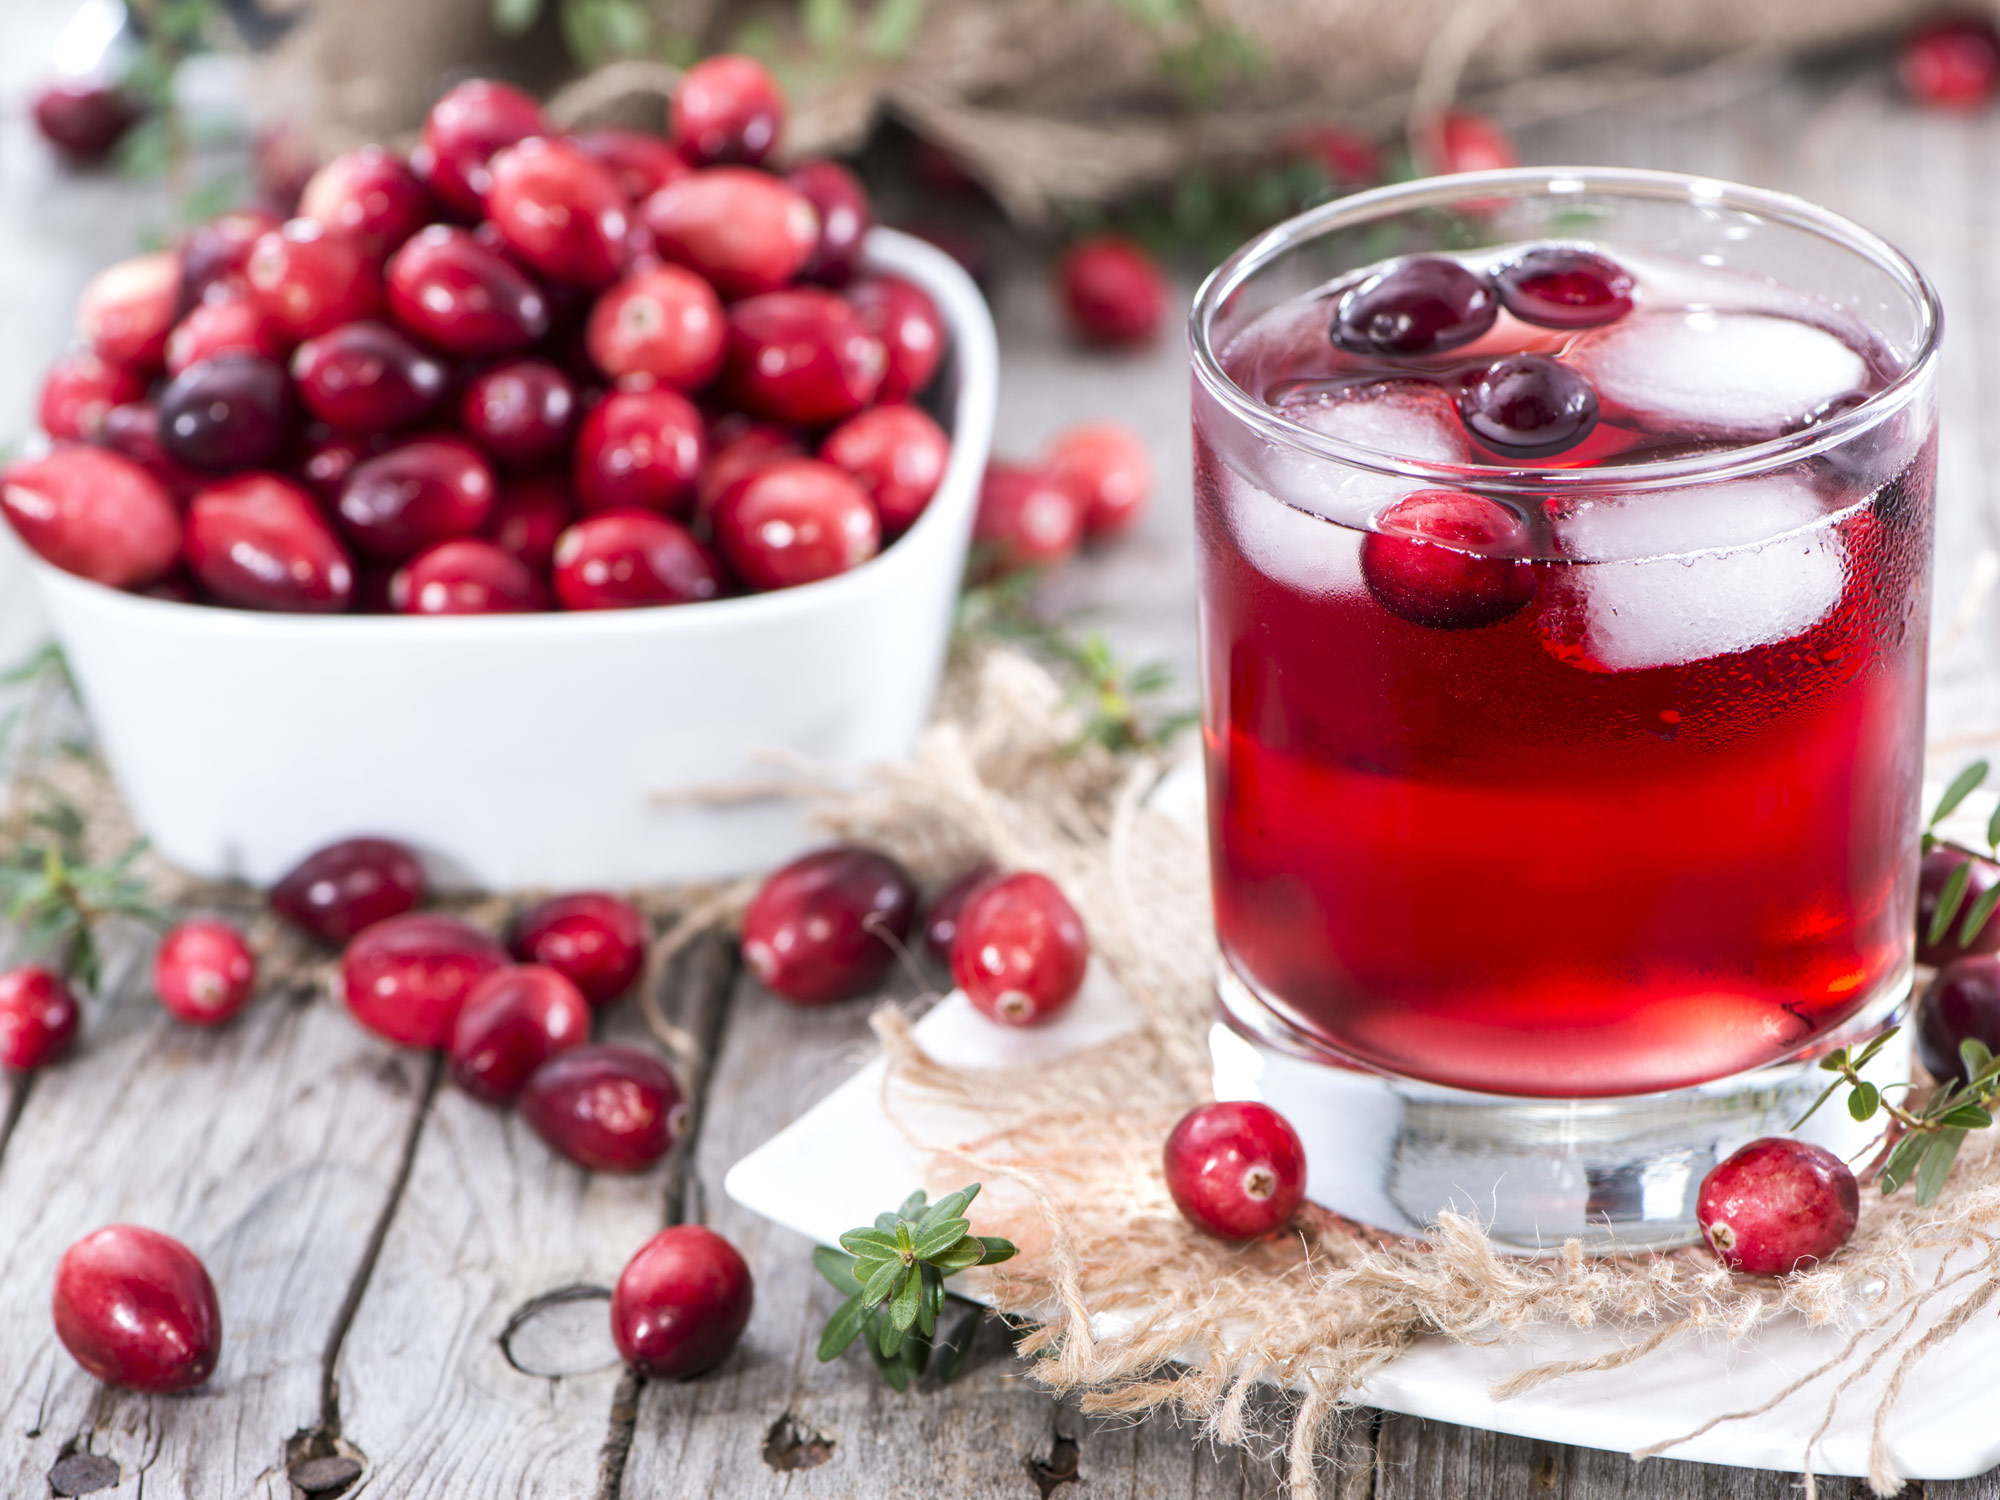 Cranberry’s best benefits go beyond the bladder